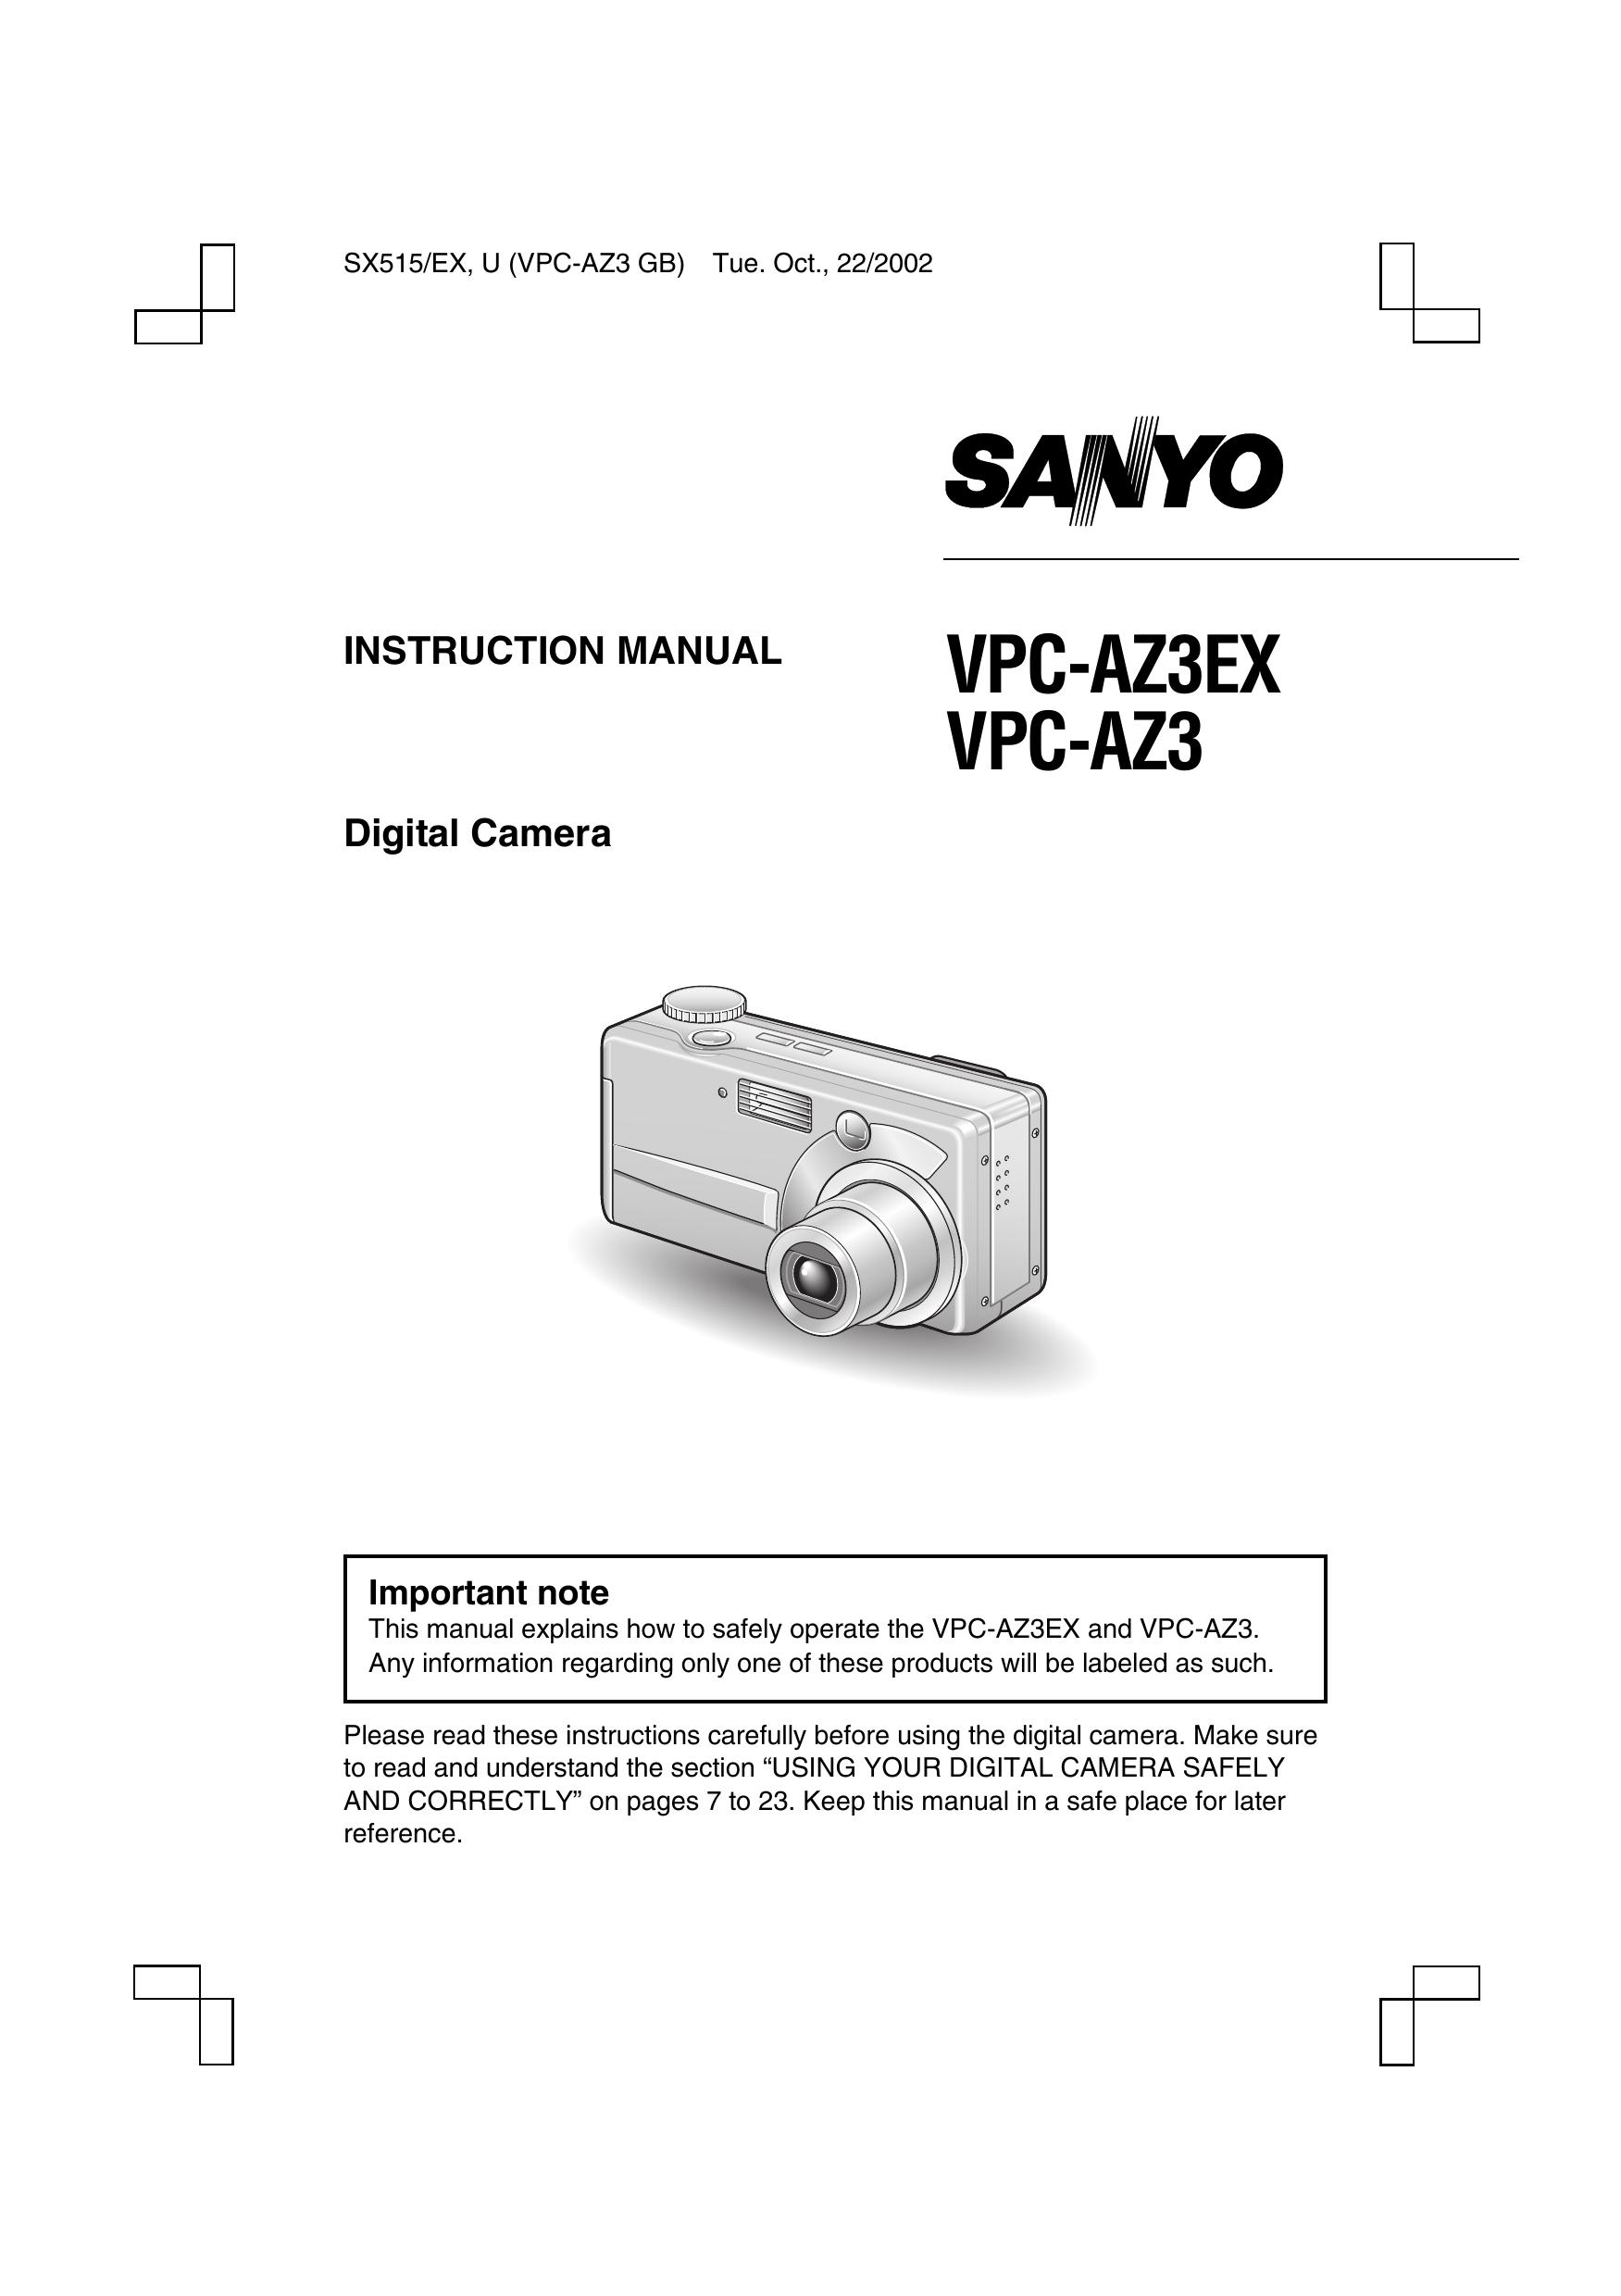 Sanyo VPC-AZ3 EX Digital Camera User Manual